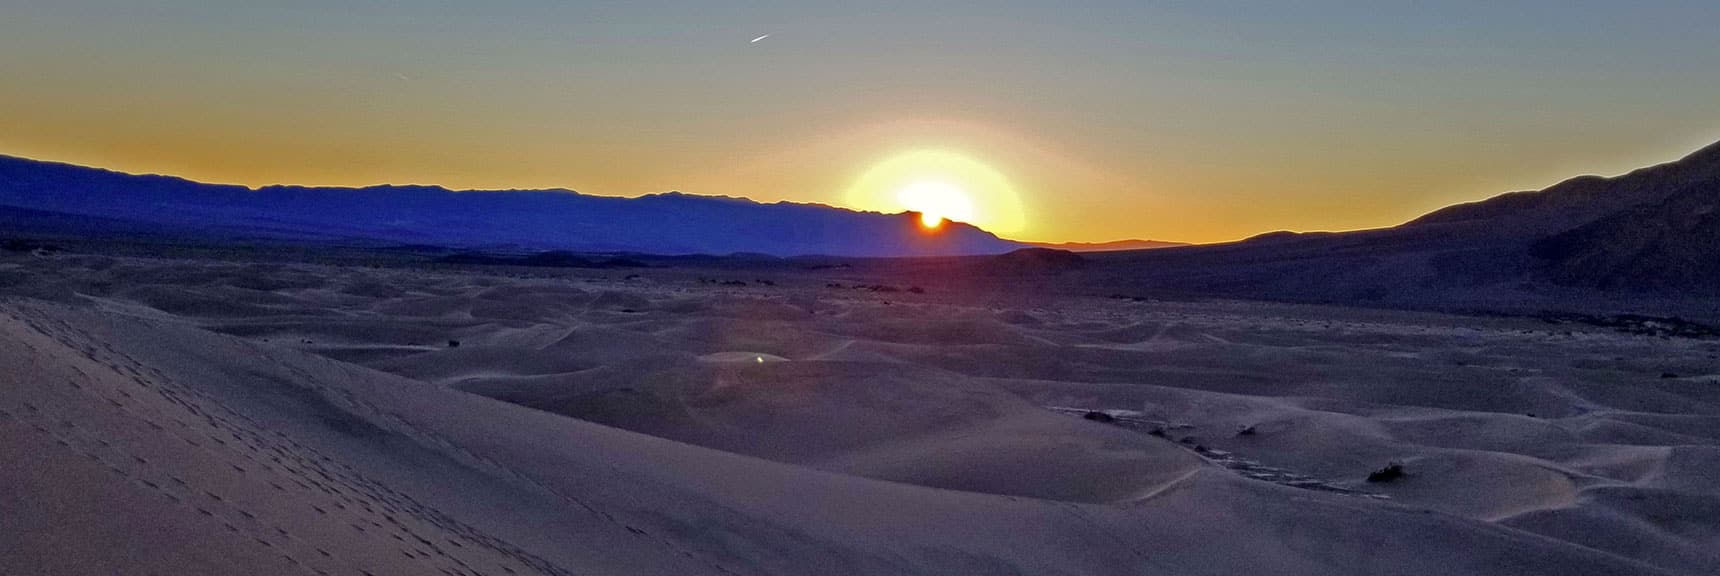 View South | Mesquite Sand Dunes Sunrise | Death Valley National Park, California